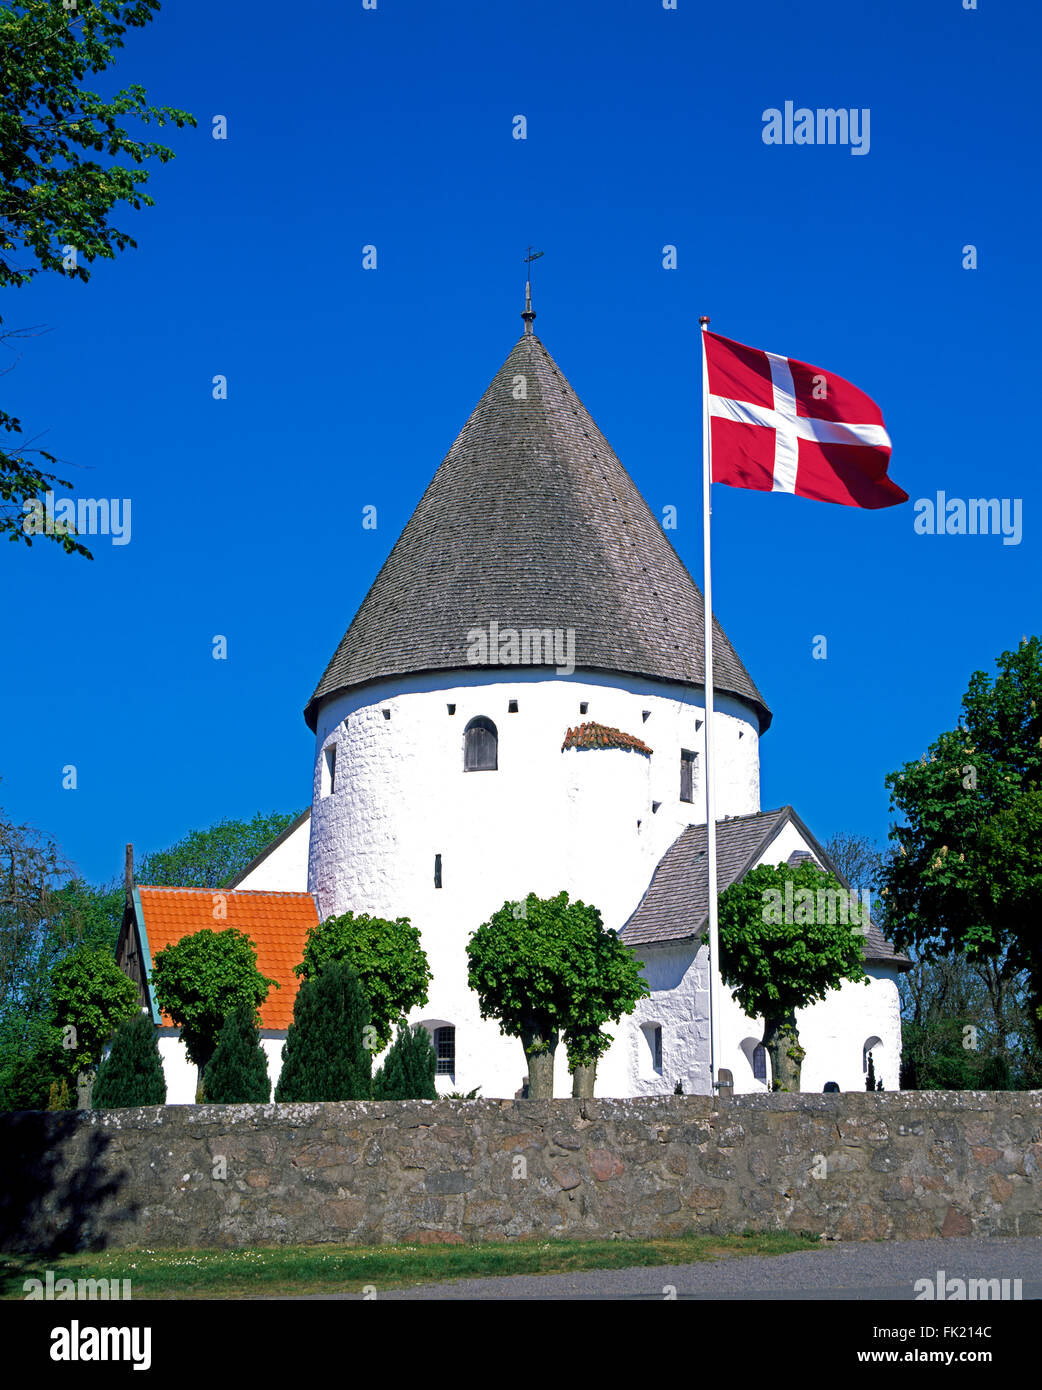 Round church Ols Kirke, Olsker, Bornholm island, Denmark, Scandinavia, Europe Stock Photo